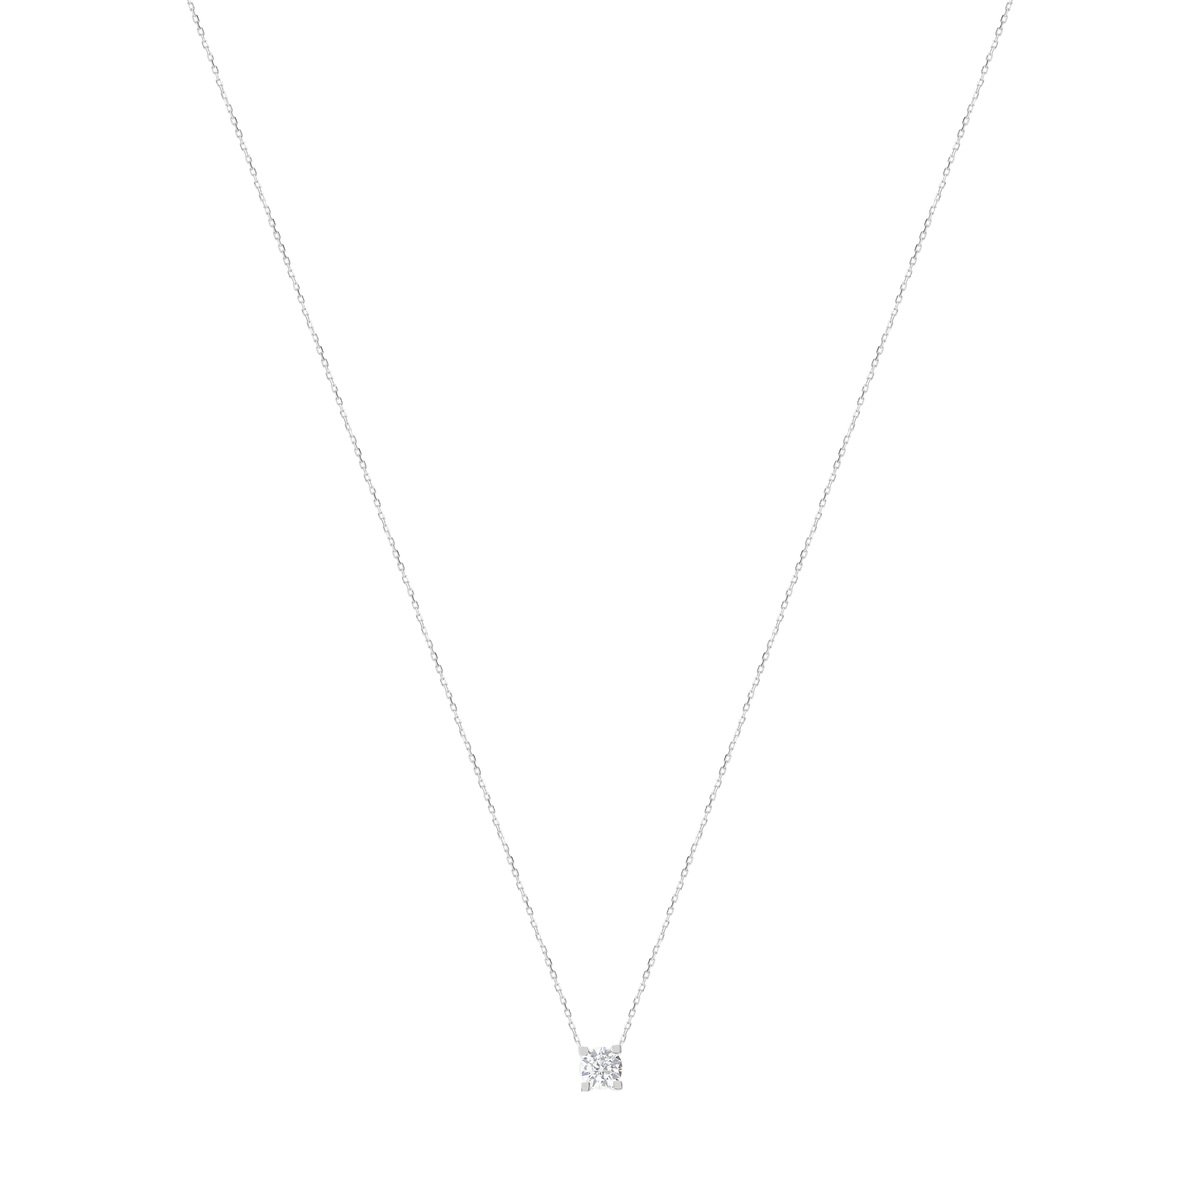 Collier or 750 blanc diamant synthétique 0,50 carat 42 cm